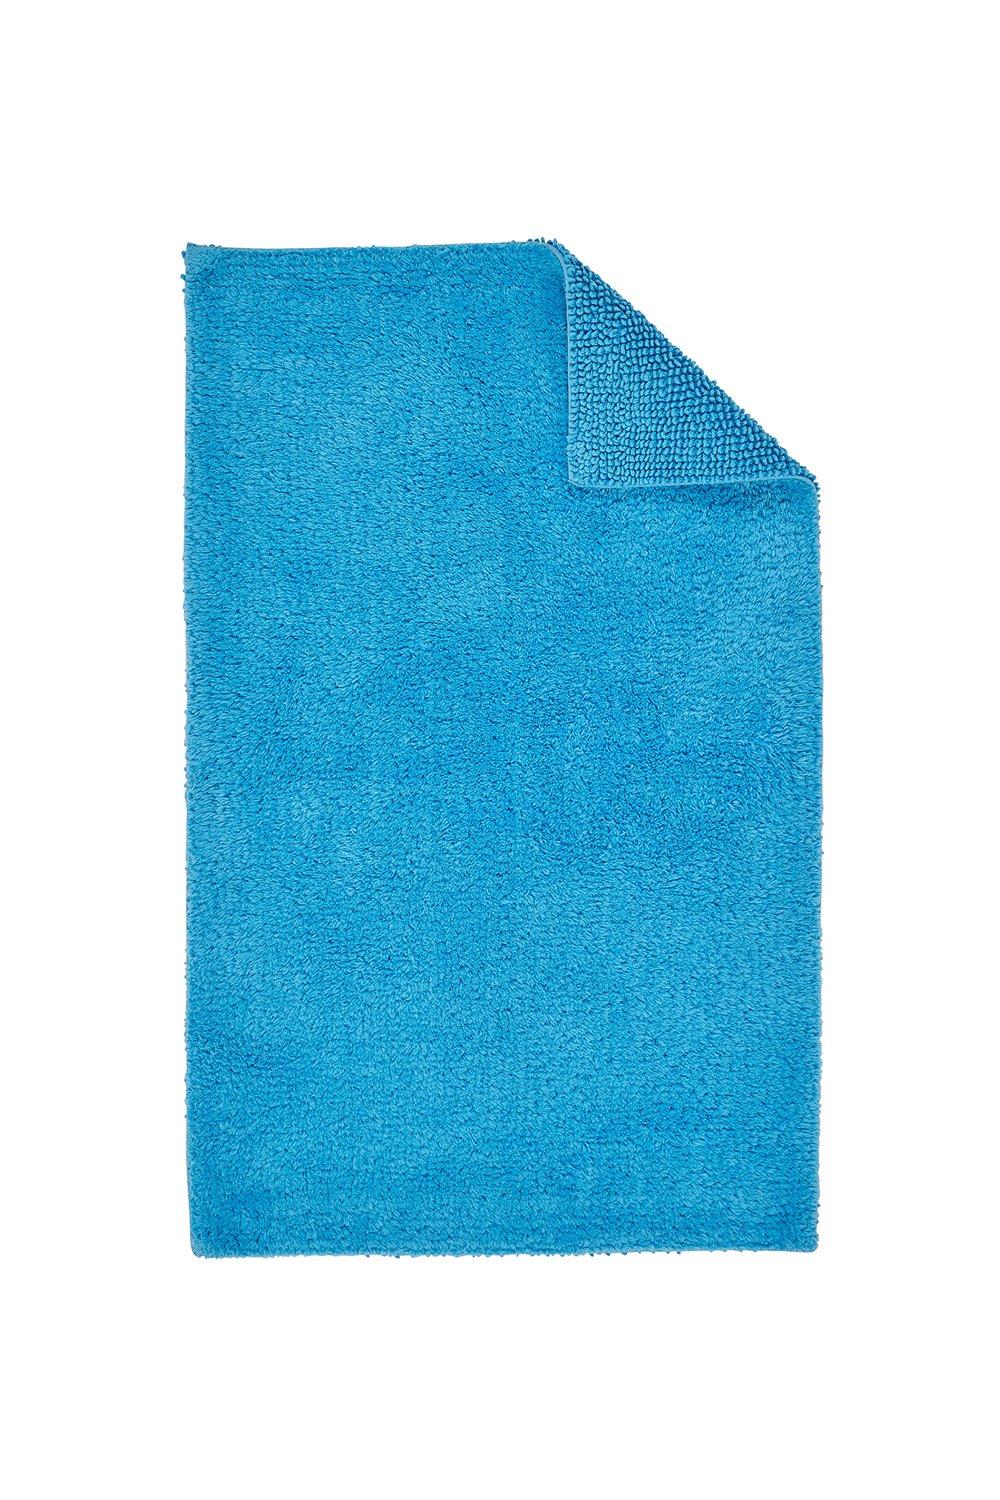 Christy - Reversible Rug Bath Mat - Cadet Blue